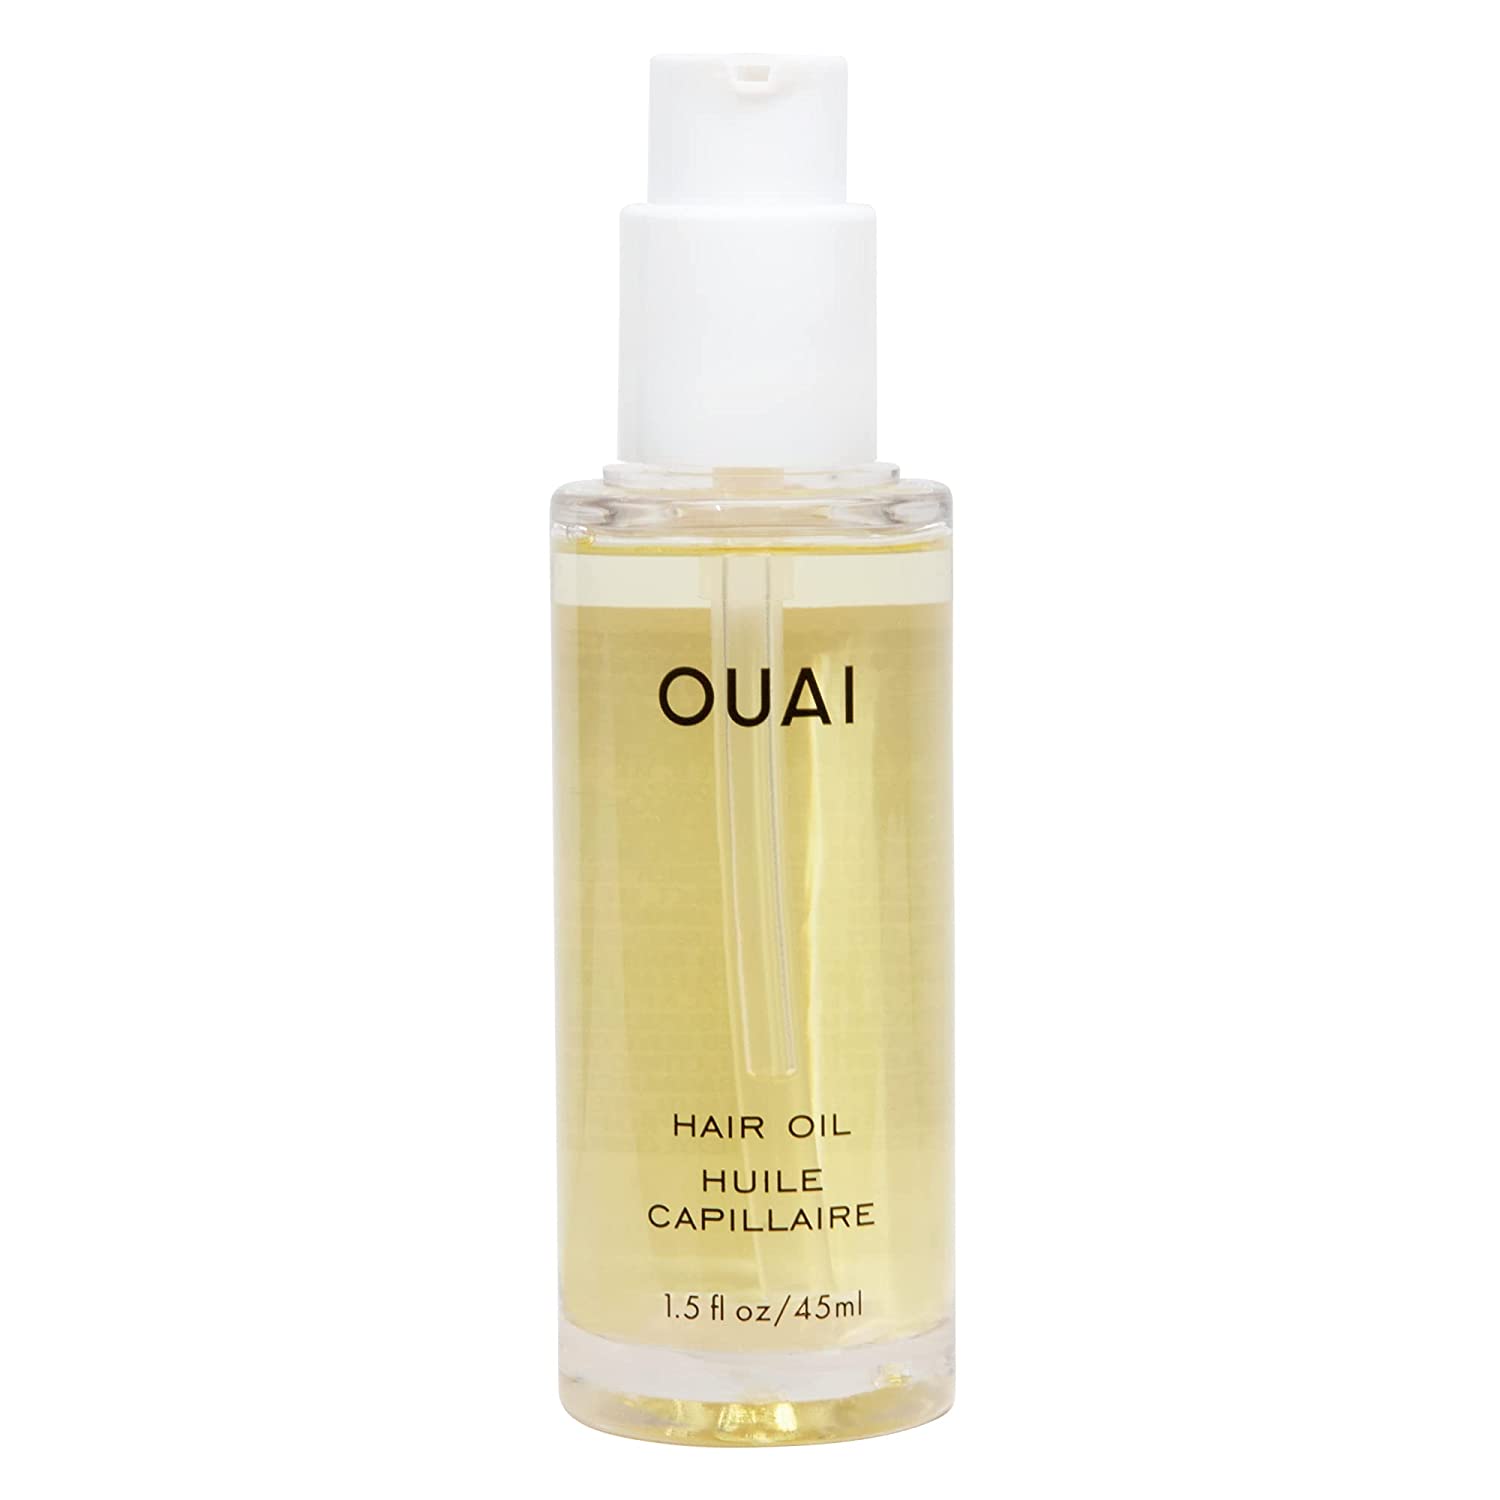 OUAI Hair Oil Sulfate-Free UV Hair Protectant